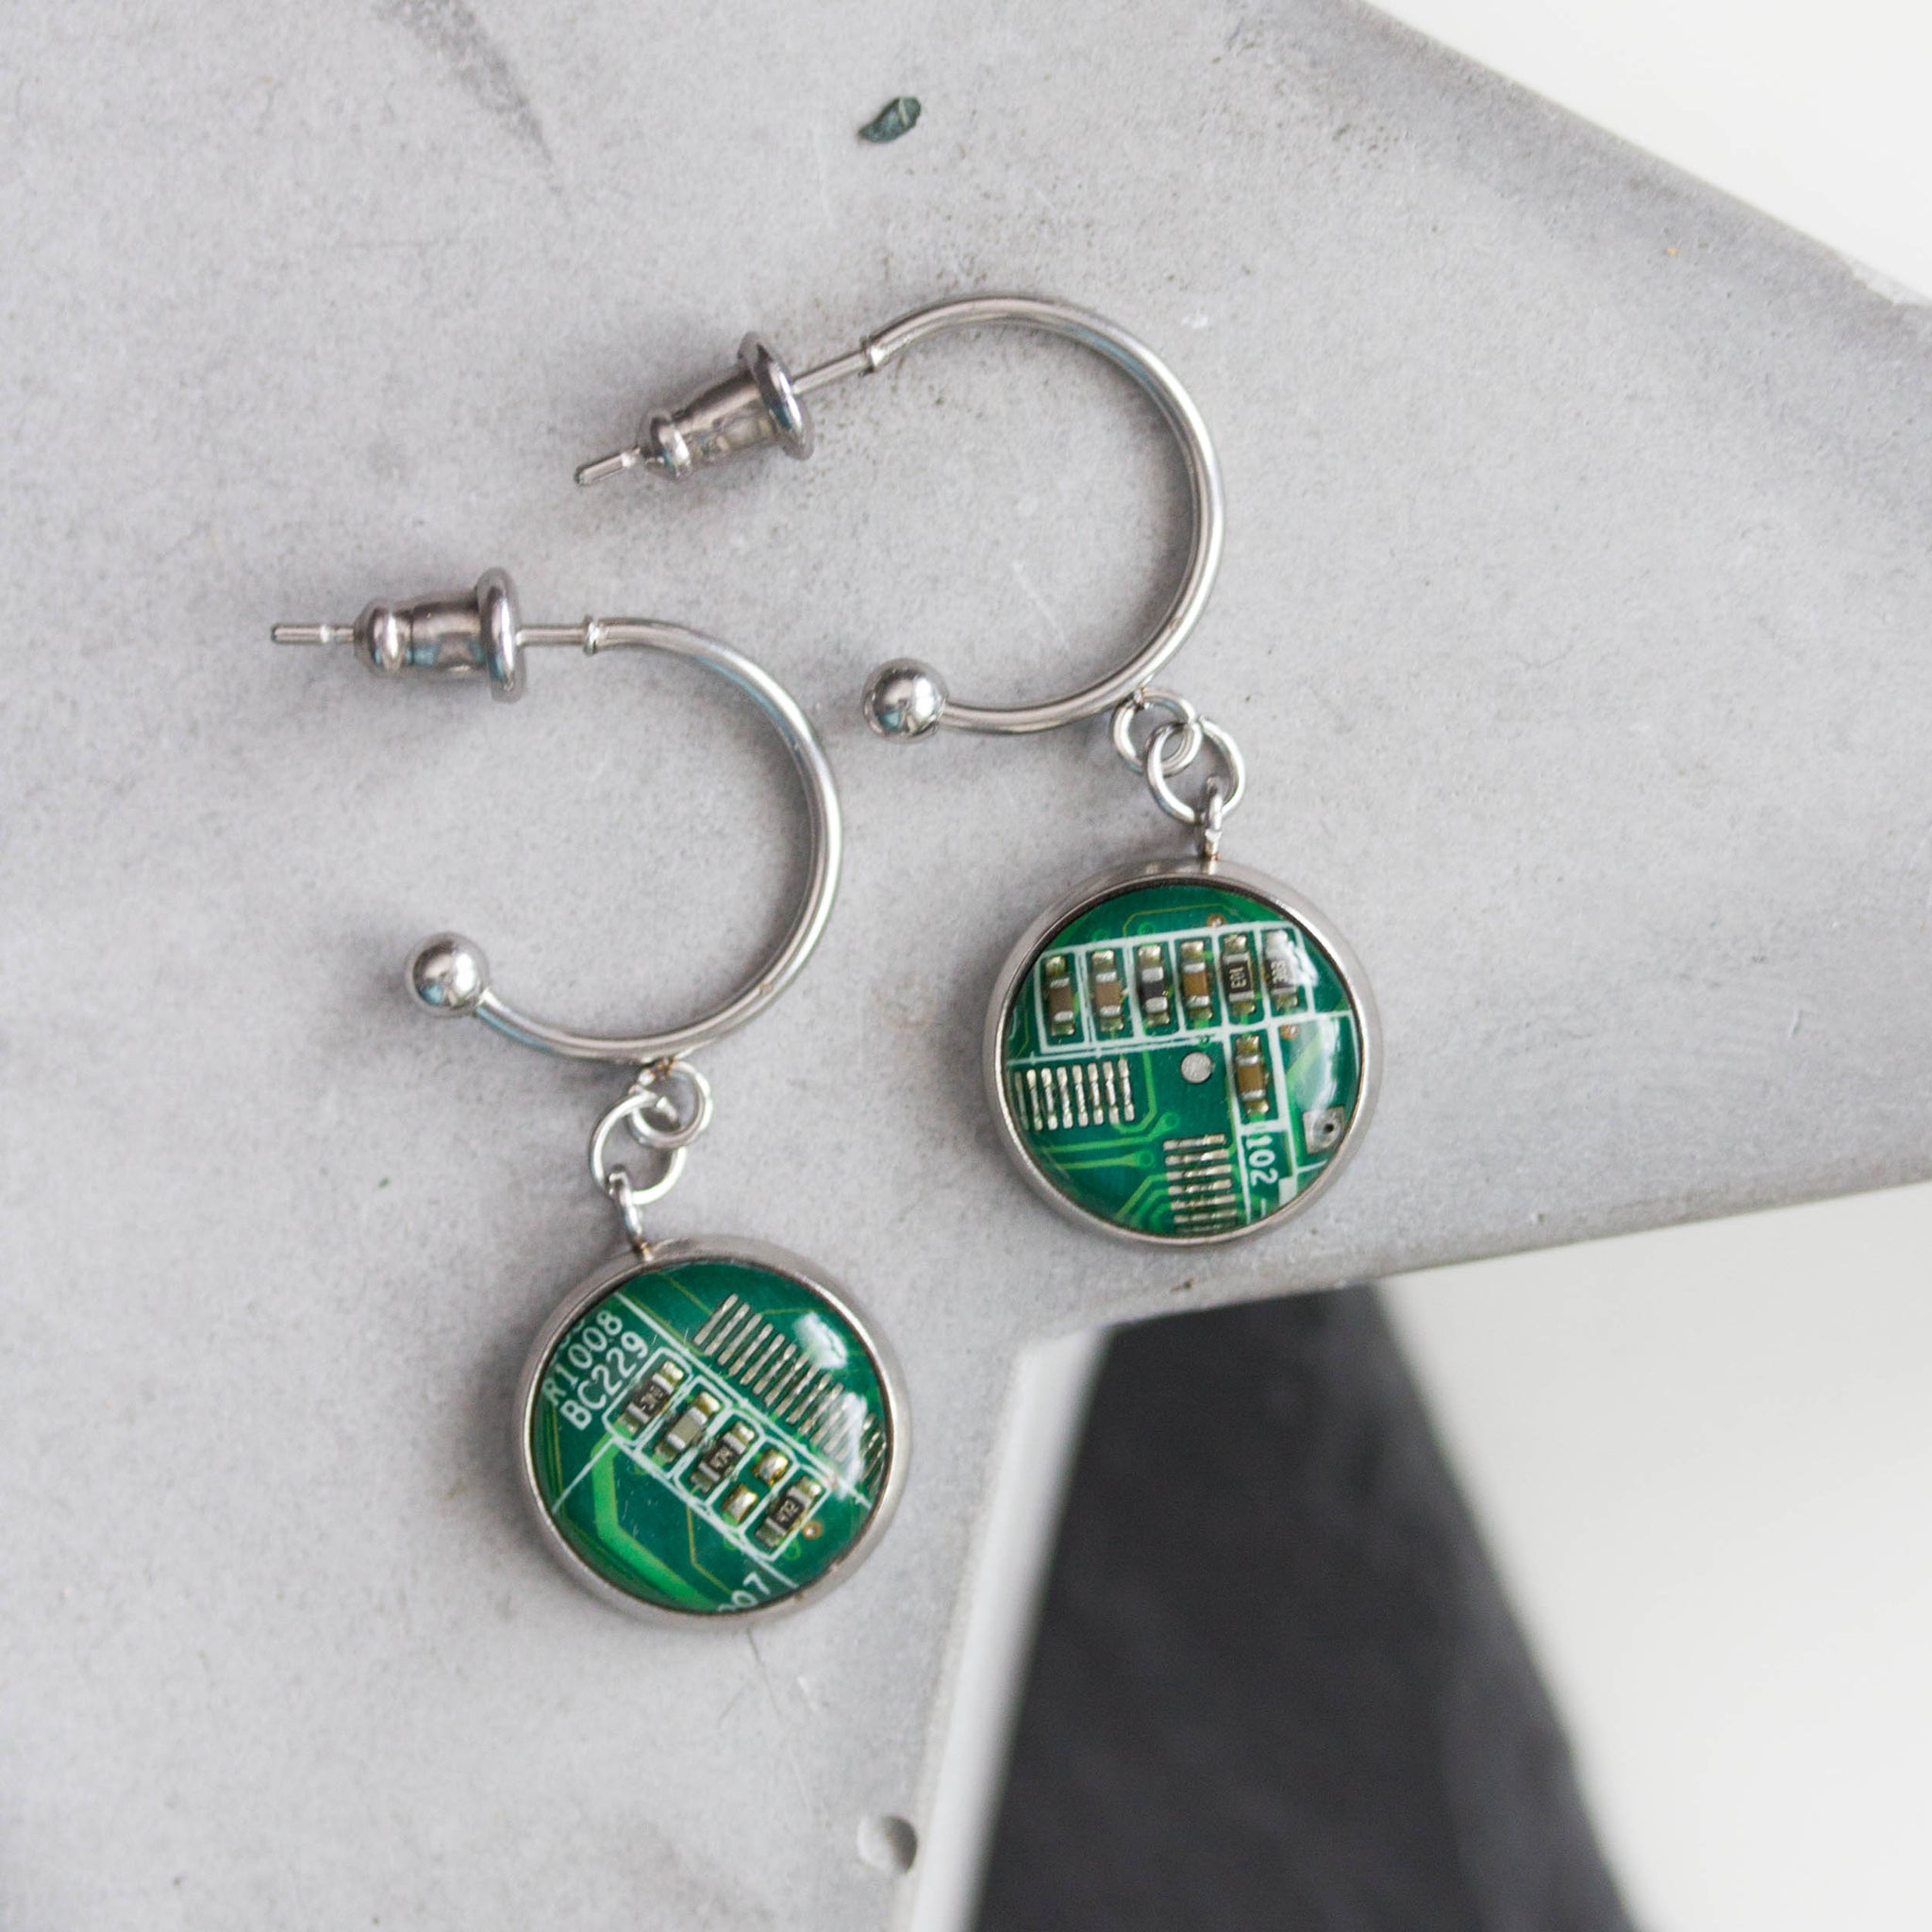 Stud earrings with 12mm round circuit board pendants, steel wires